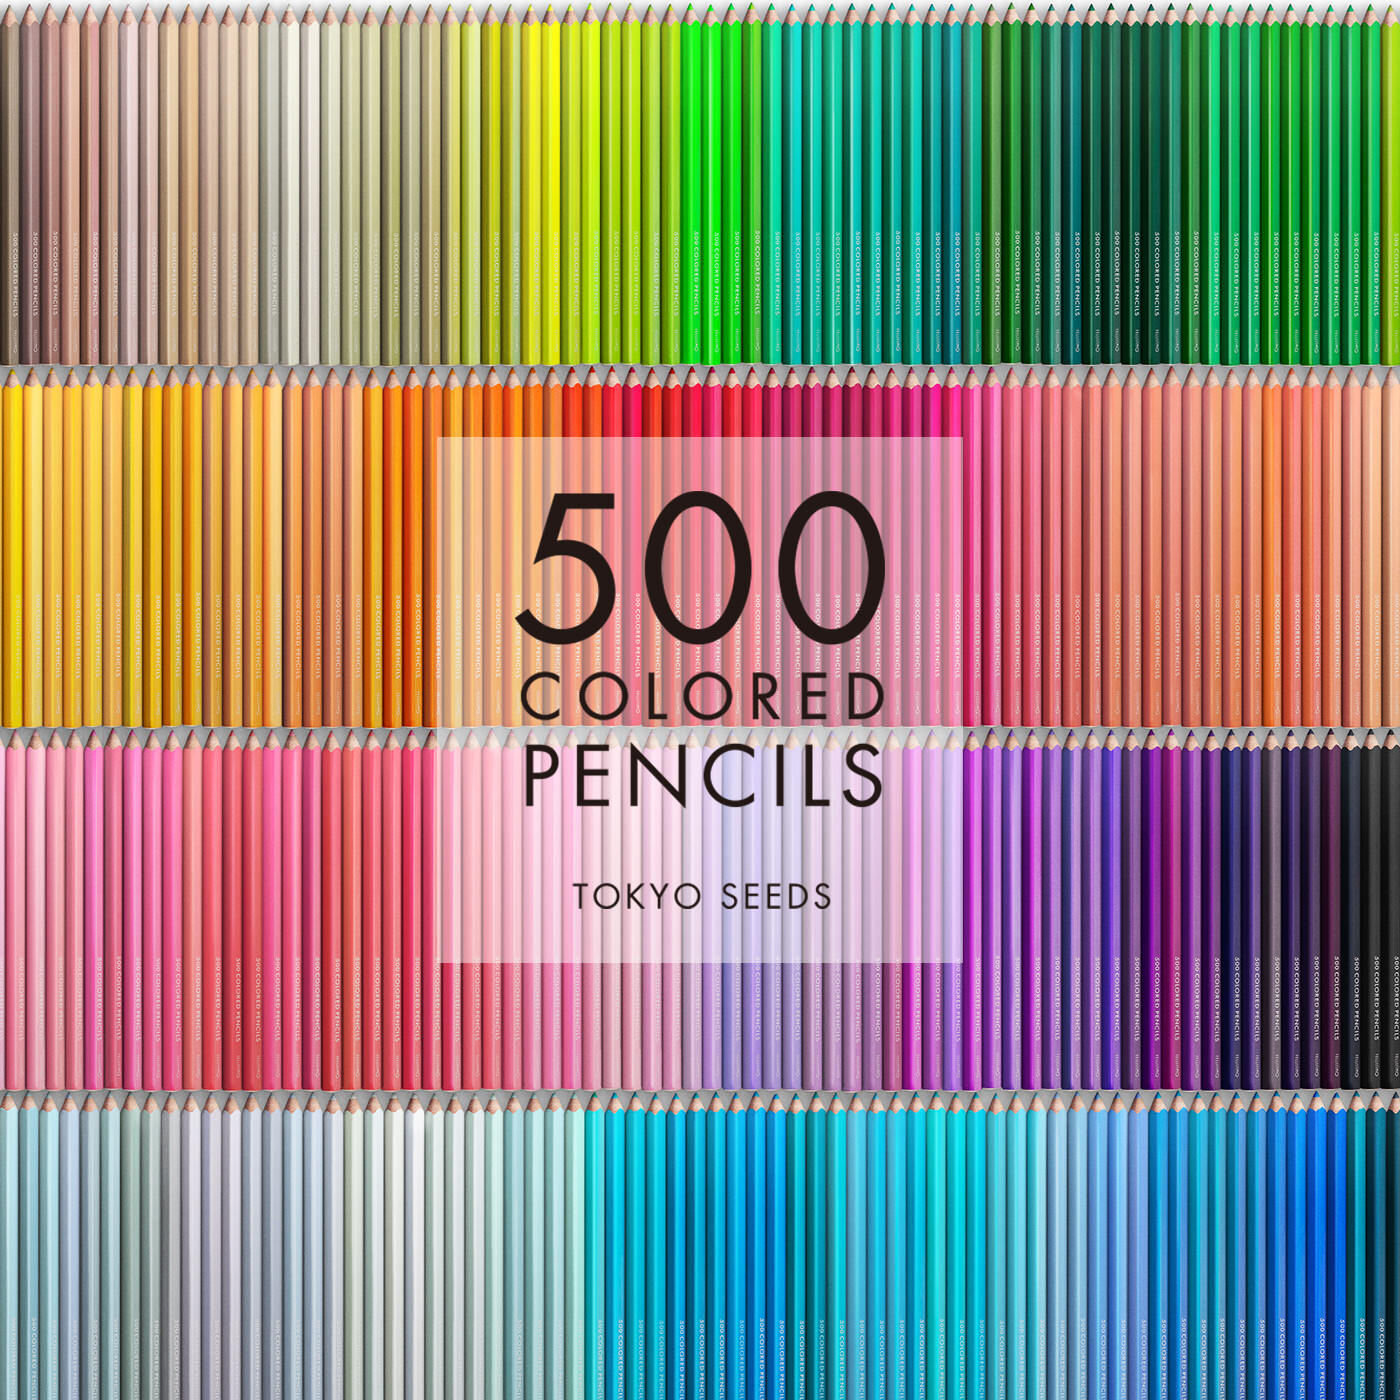 Real Stock|【398/500 NATURAL SOPHISTICATION】500色の色えんぴつ TOKYO SEEDS|1992年、世界初の「500色」という膨大な色数の色えんぴつが誕生して以来、その販売数は発売当初から合わせると、世界55ヵ国10万セット以上。今回、メイド・イン・ジャパンにこだわり、すべてが新しく生まれ変わって登場しました。